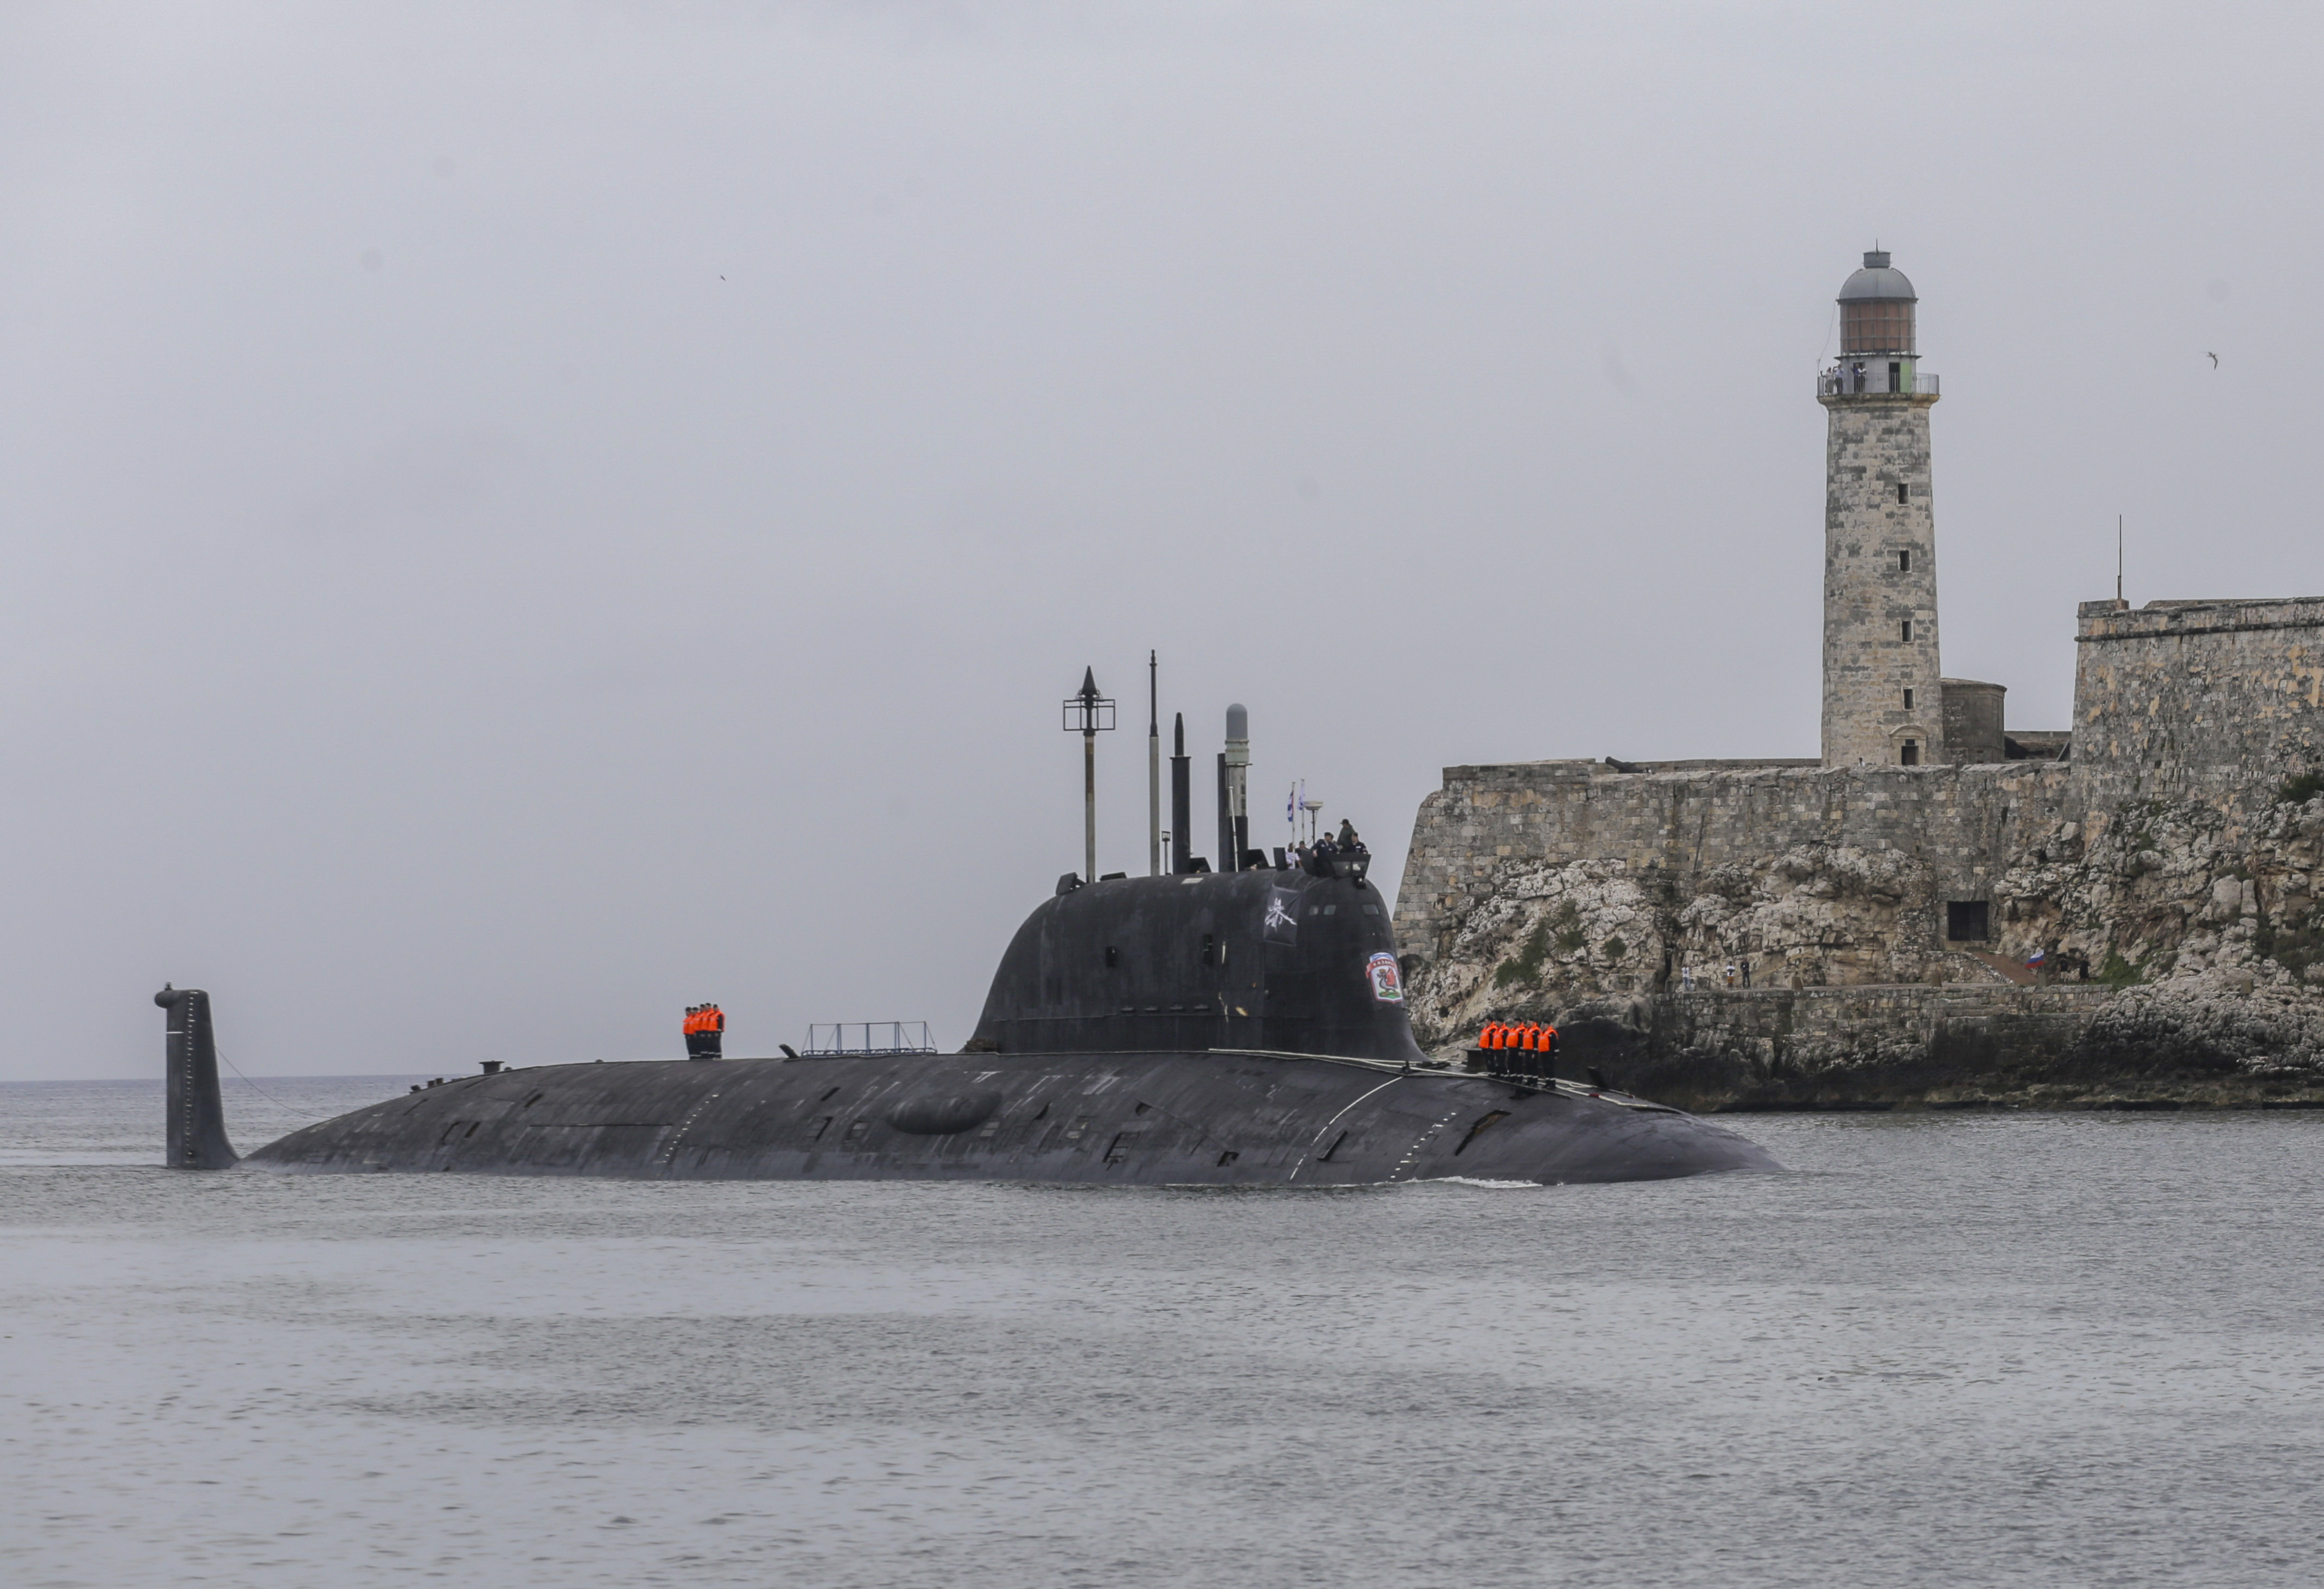 Submarino de EU llega a la base de Guantánamo tras arribo de flotilla rusa a La Habana